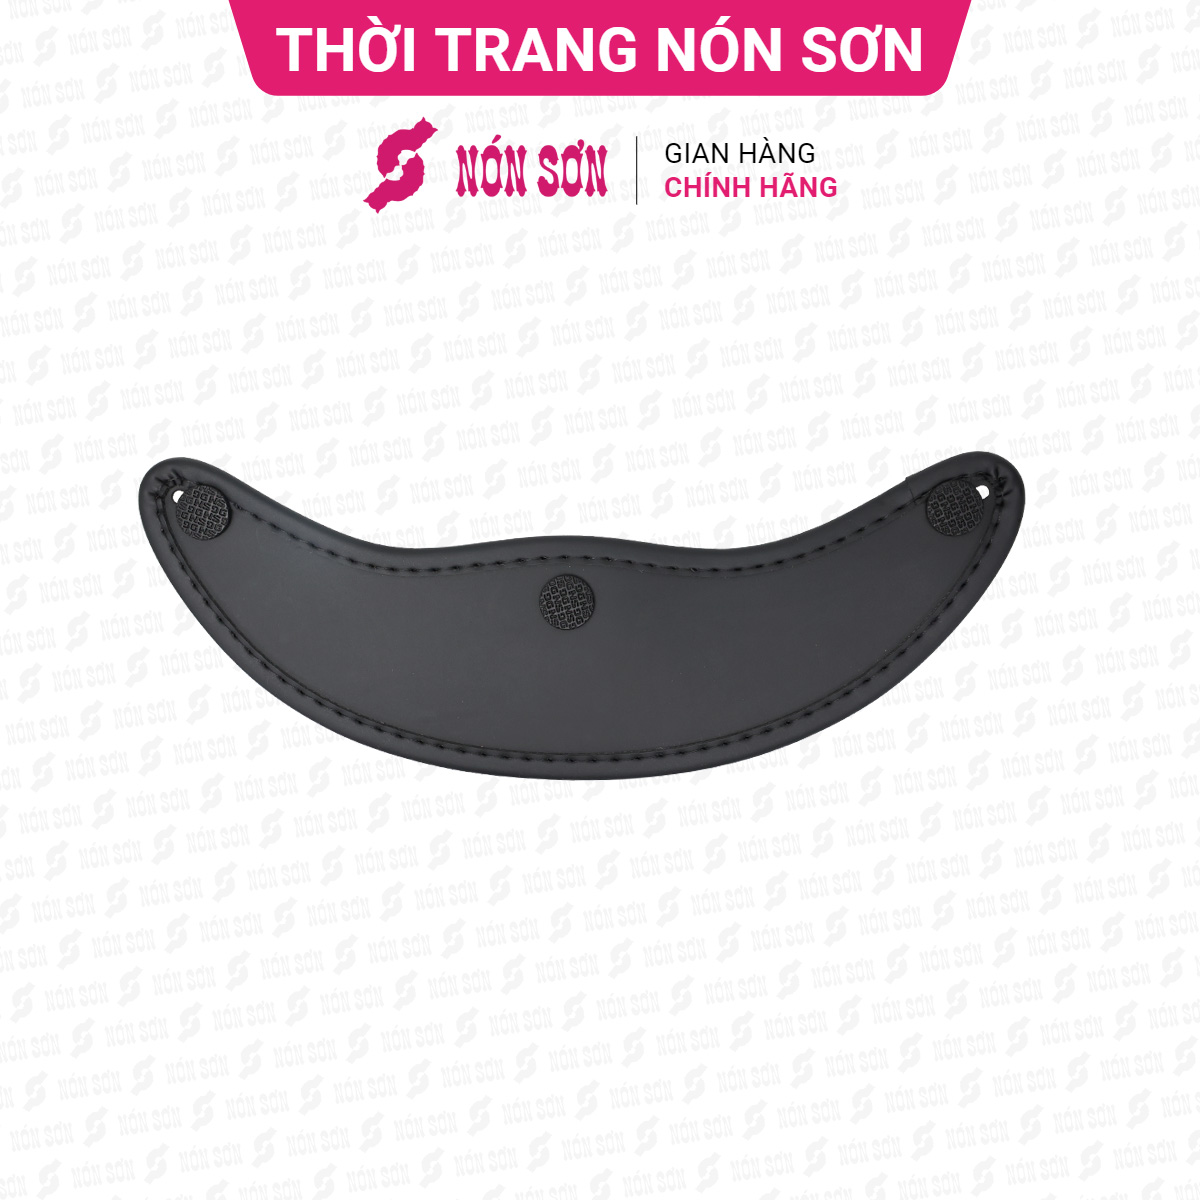 Phụ kiện lưỡi nón bảo hiểm Nón Sơn - LUOI80